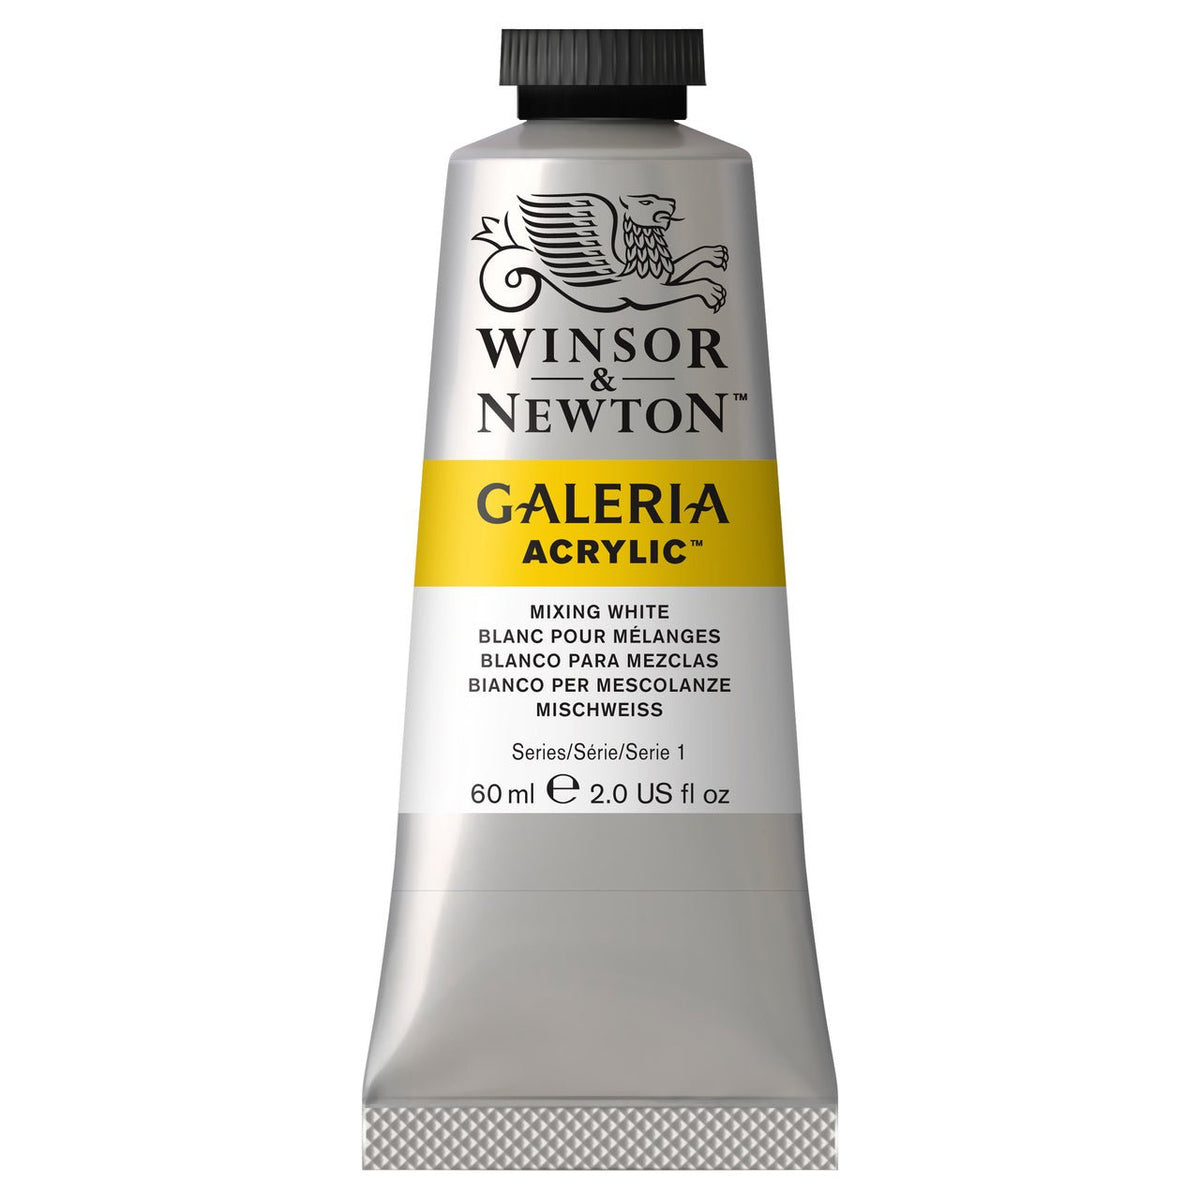 Winsor & Newton Galeria Acrylic Mixing White 60 ml - merriartist.com